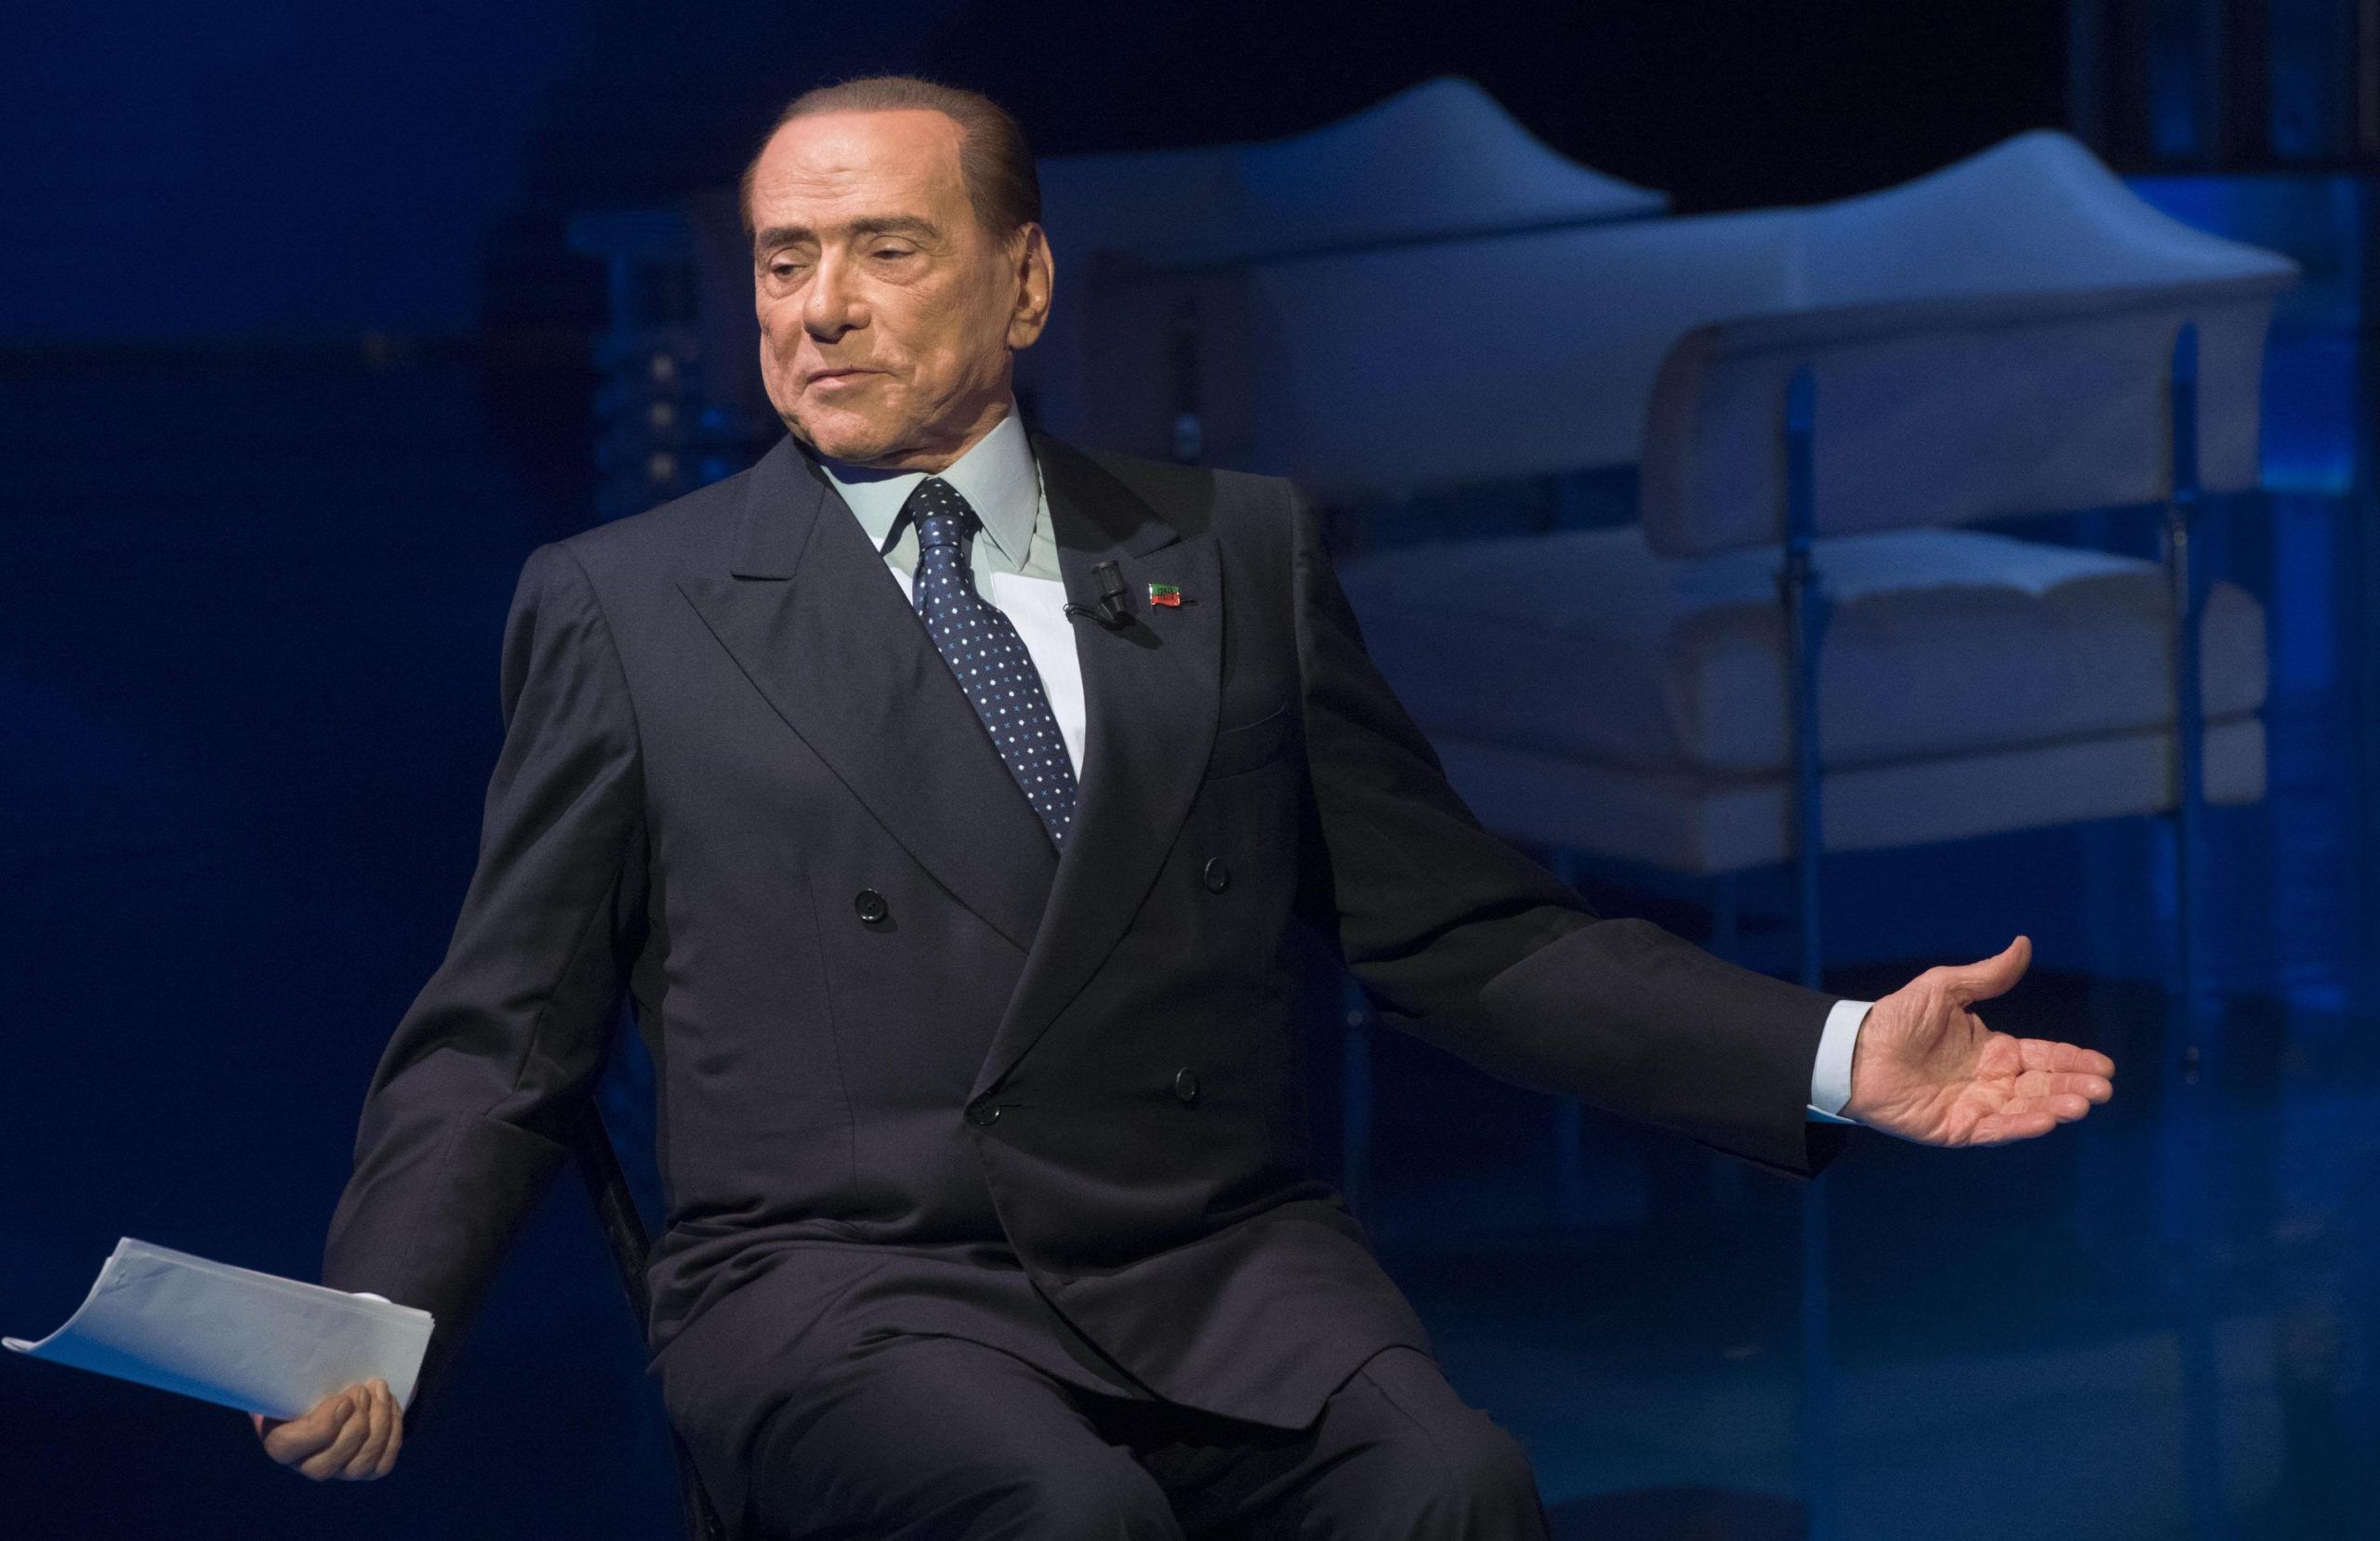 Silvio Berlusconi Rai TV program 'Porta a porta'